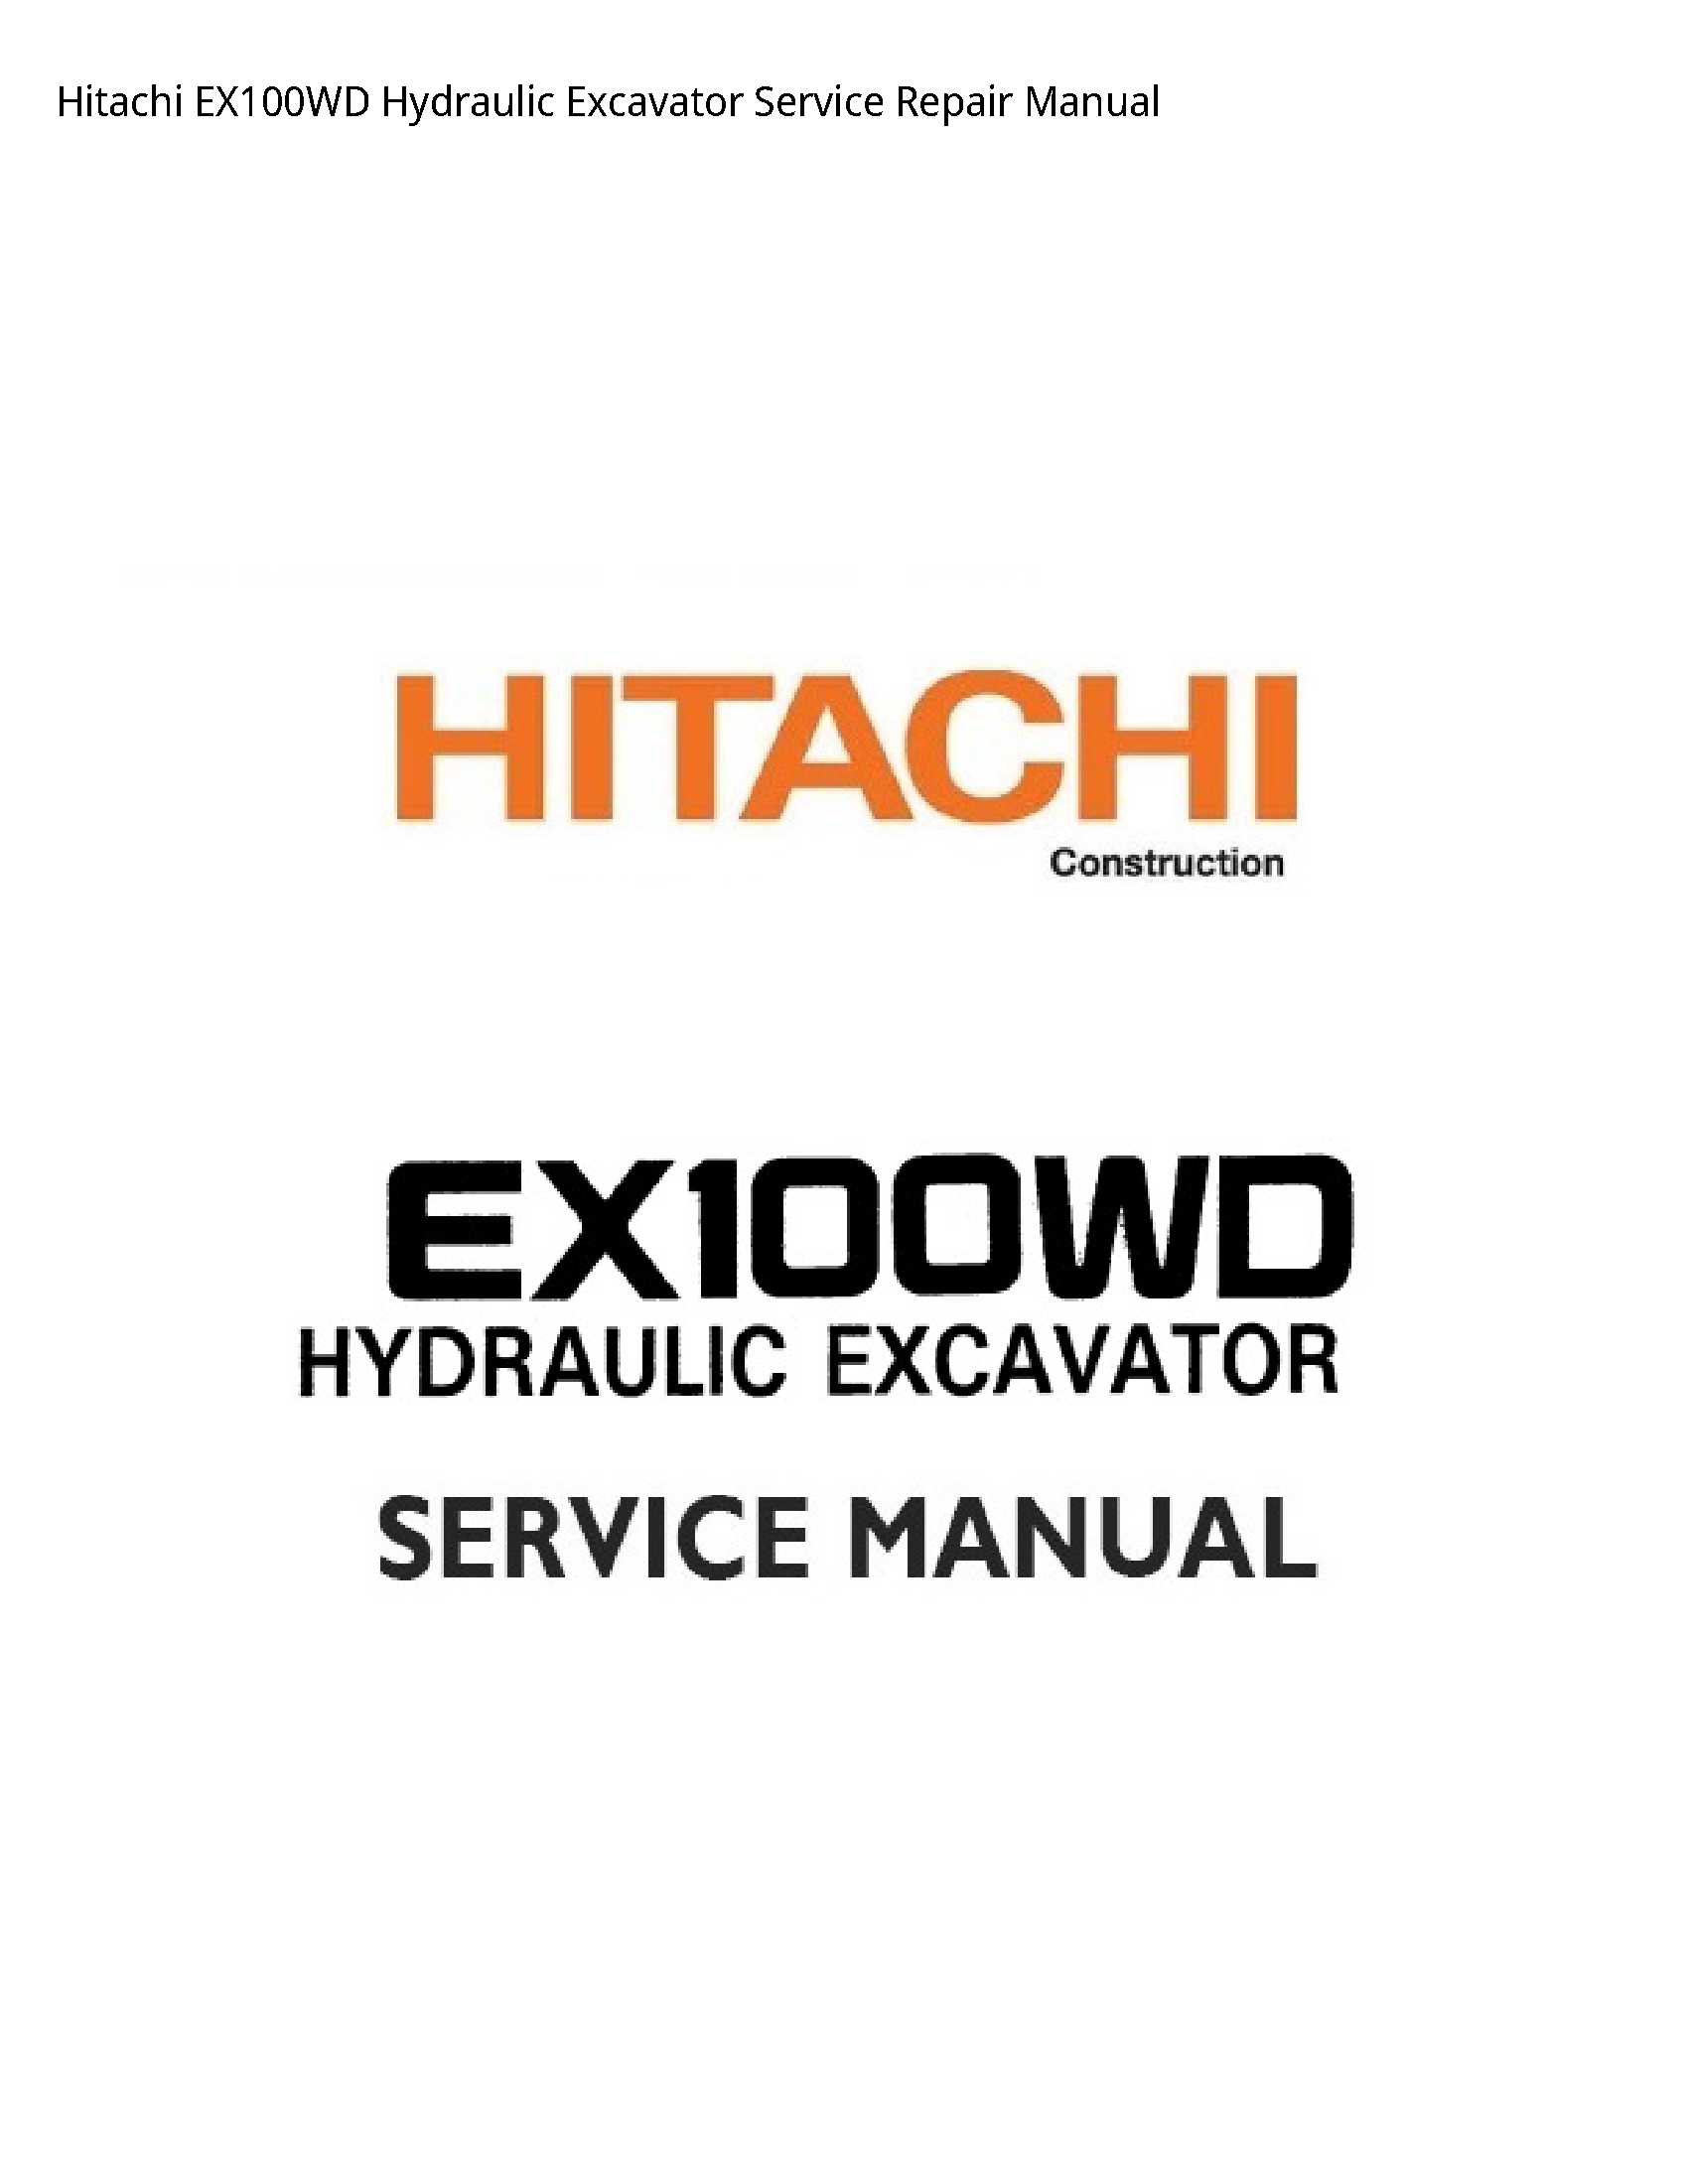 Hitachi EX100WD Hydraulic Excavator manual